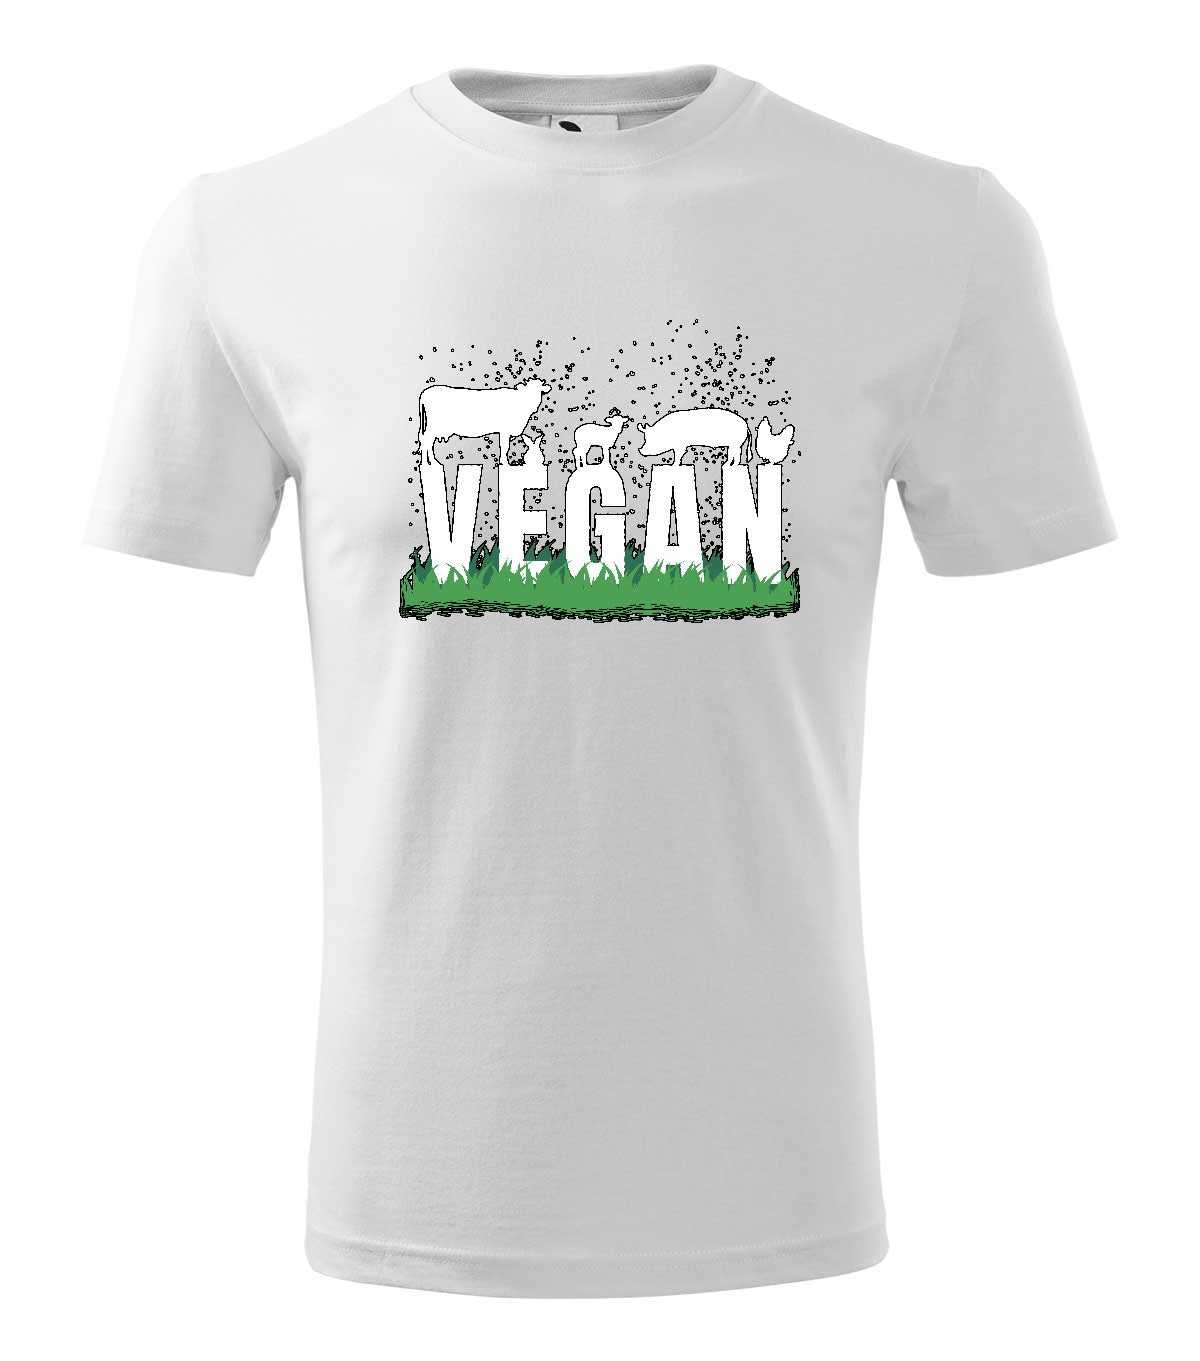 Vegan férfi technikai póló